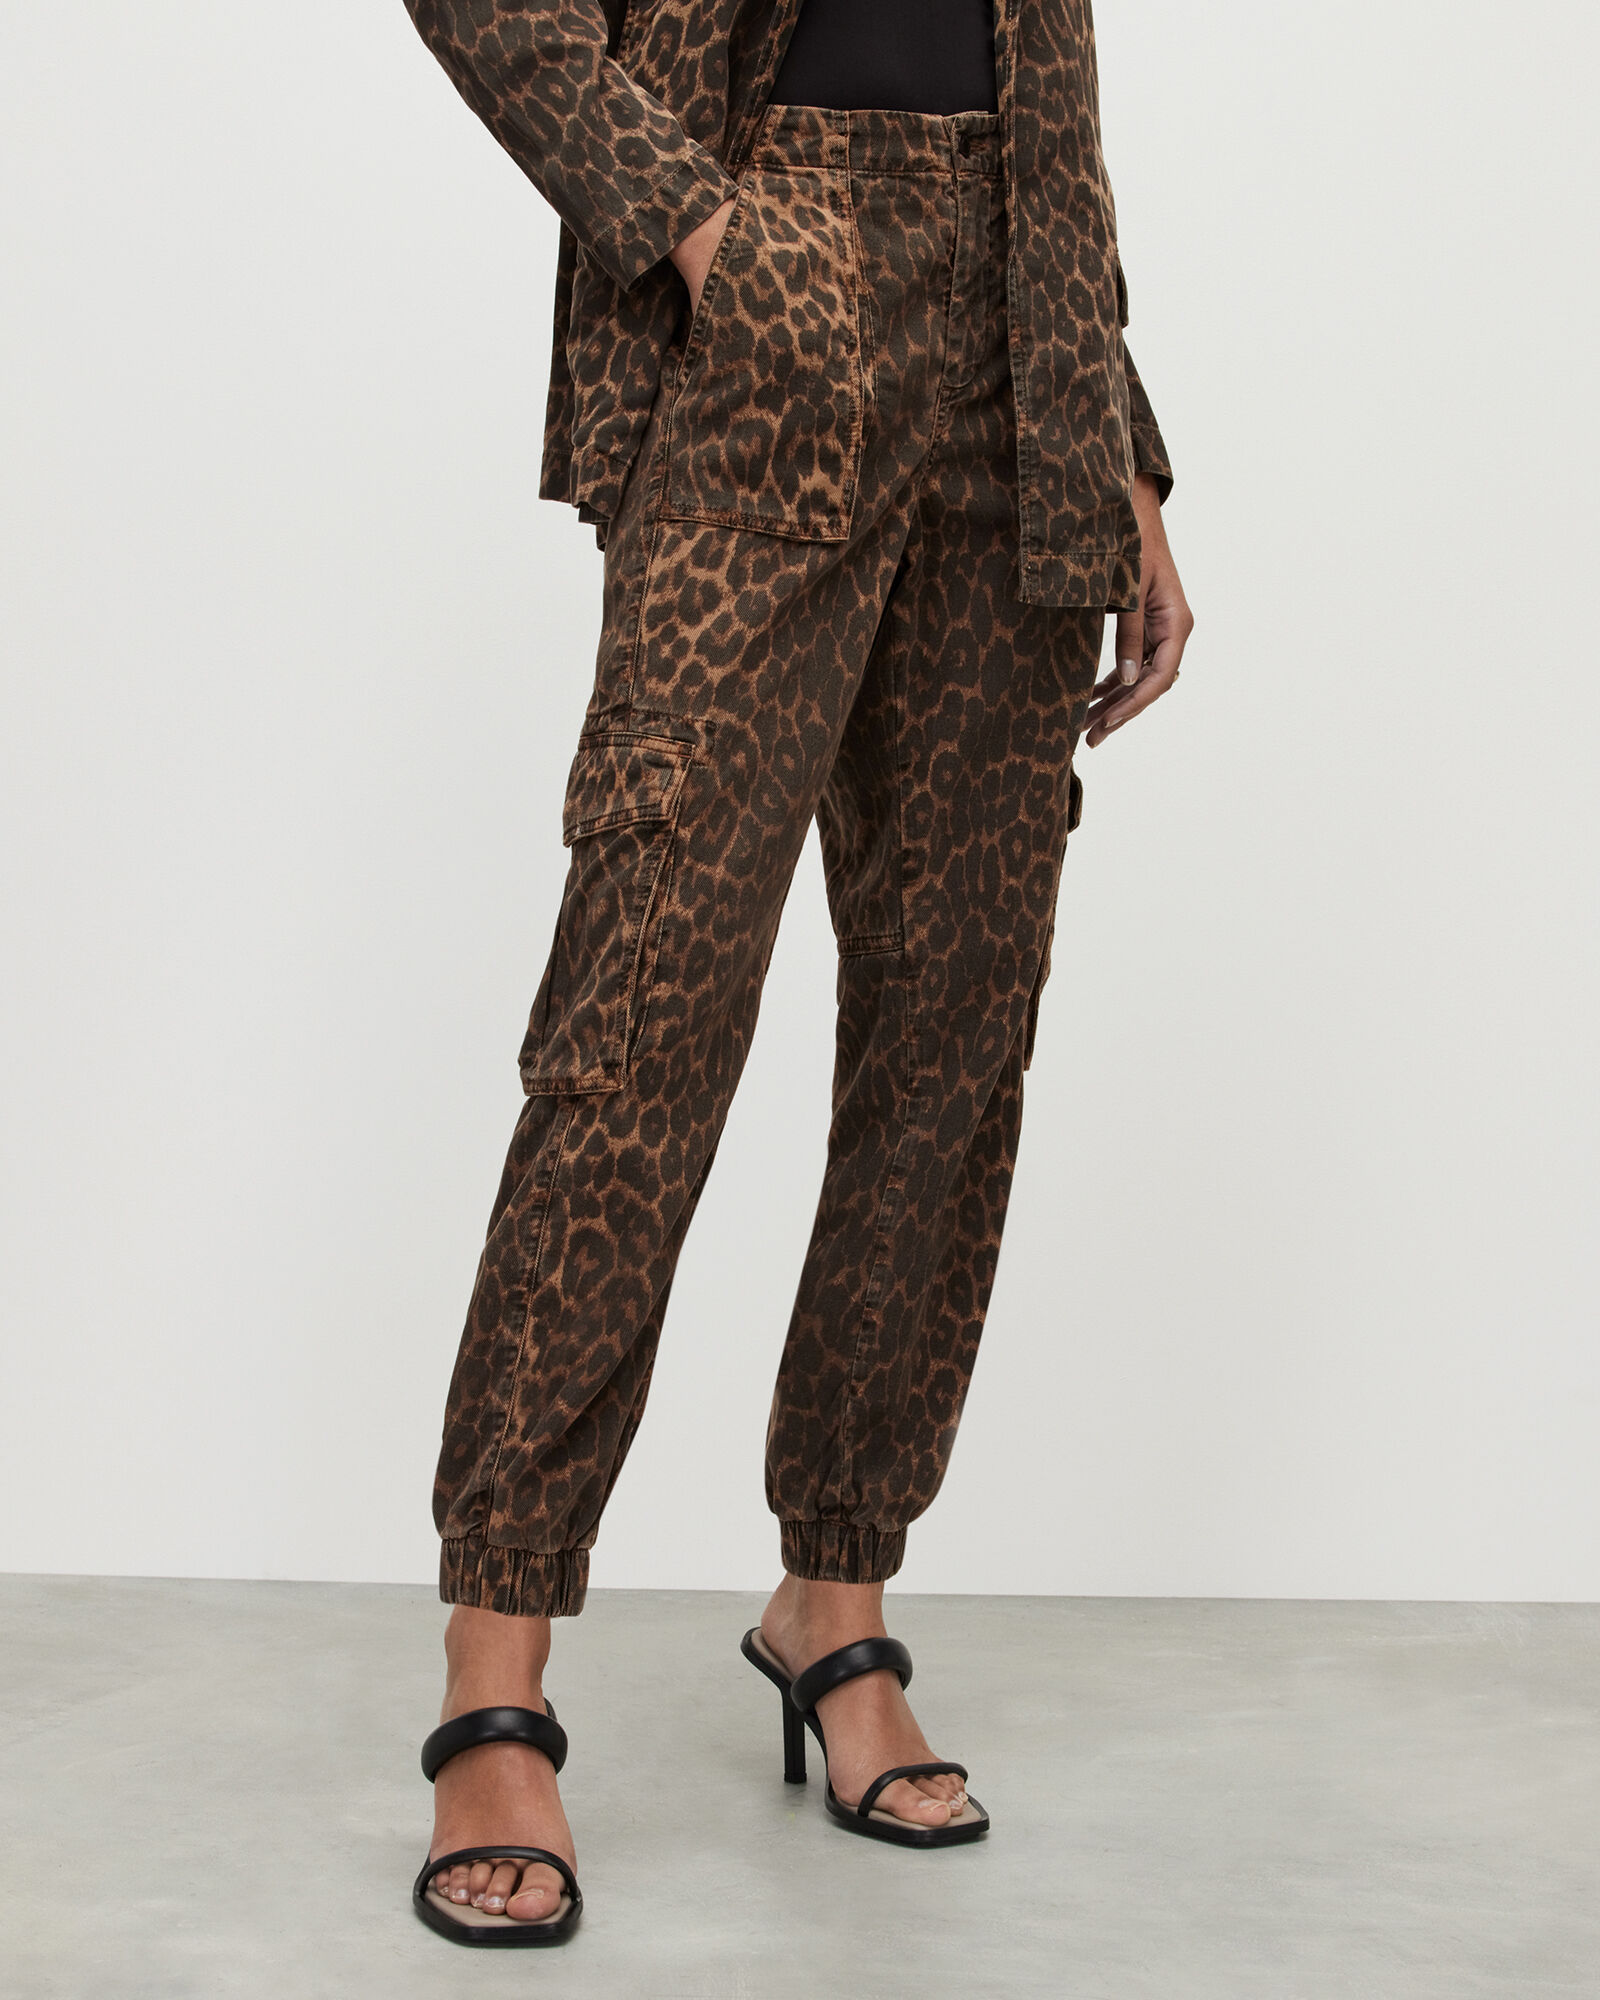 Buy Rosatro Women Trouser Regular fitLadies Women Leopard Print High Waist  Wide Leg Trousers Casual Pants for Summer FormalCasual Wear at Amazonin